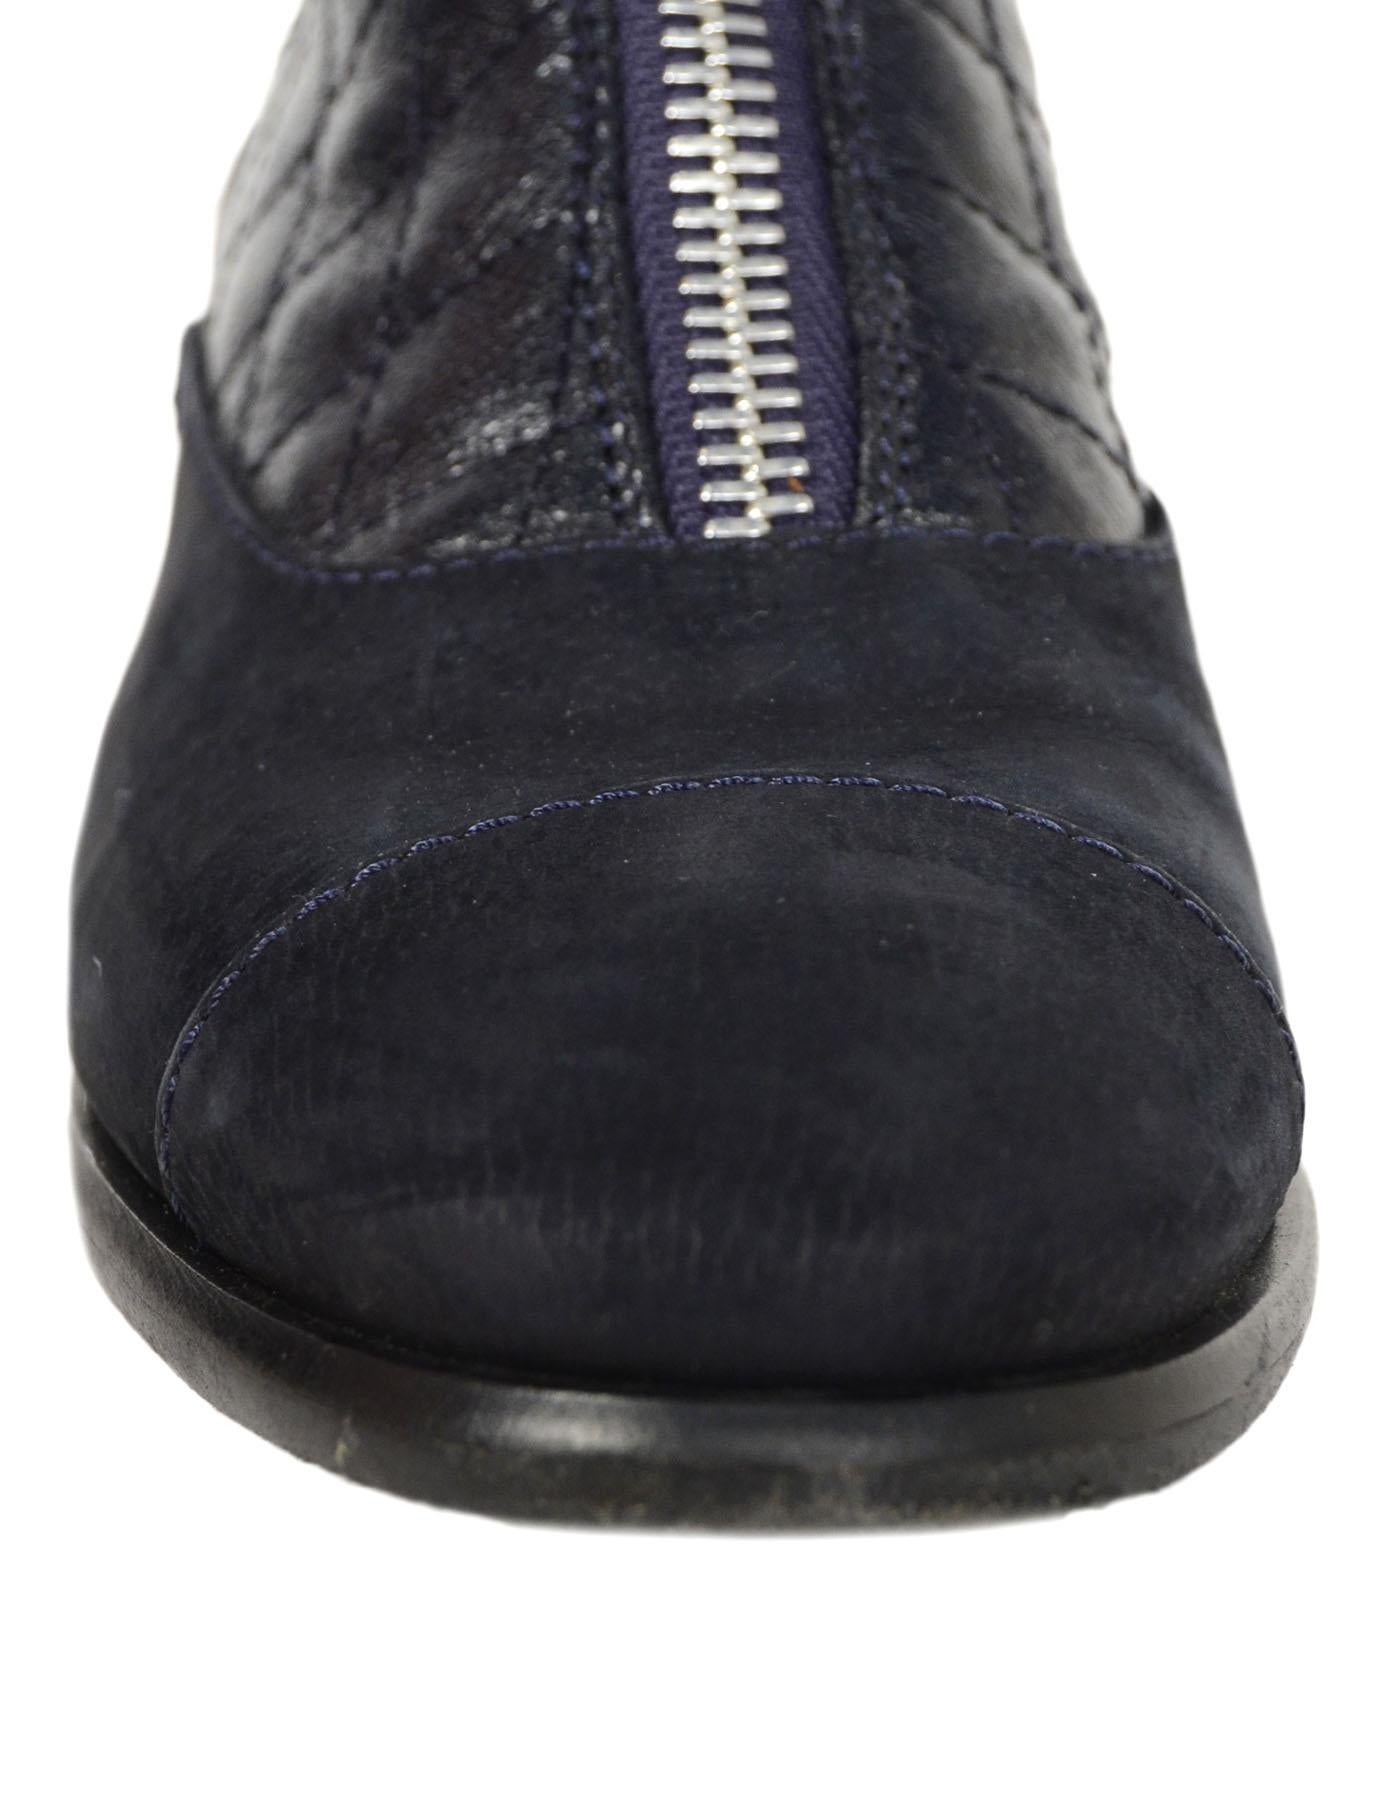 Women's Chanel Navy Calfskin Quilted Zip Front Boots sz 37